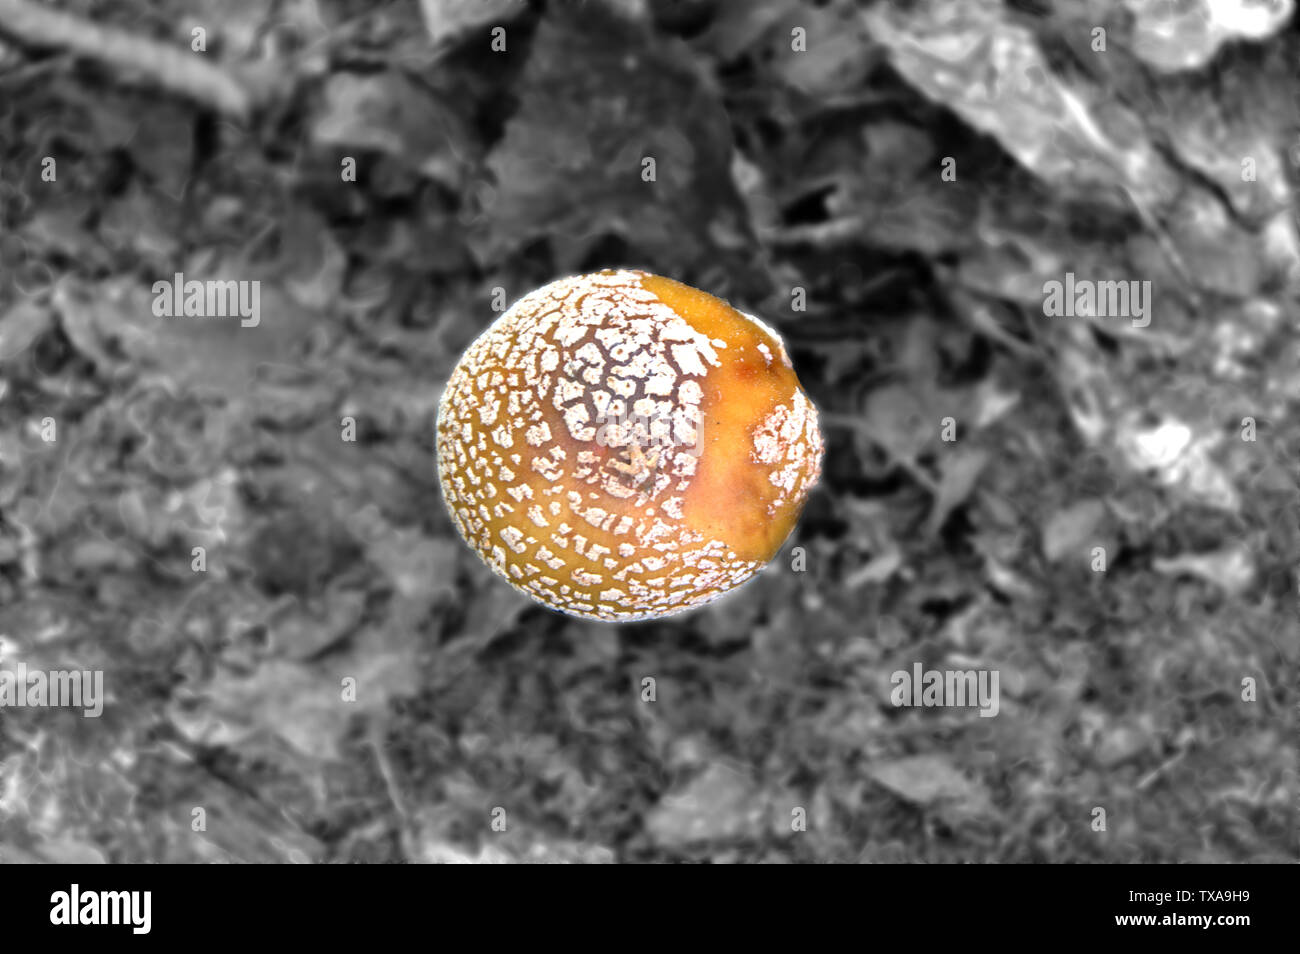 looking down on an orange fungus Stock Photo